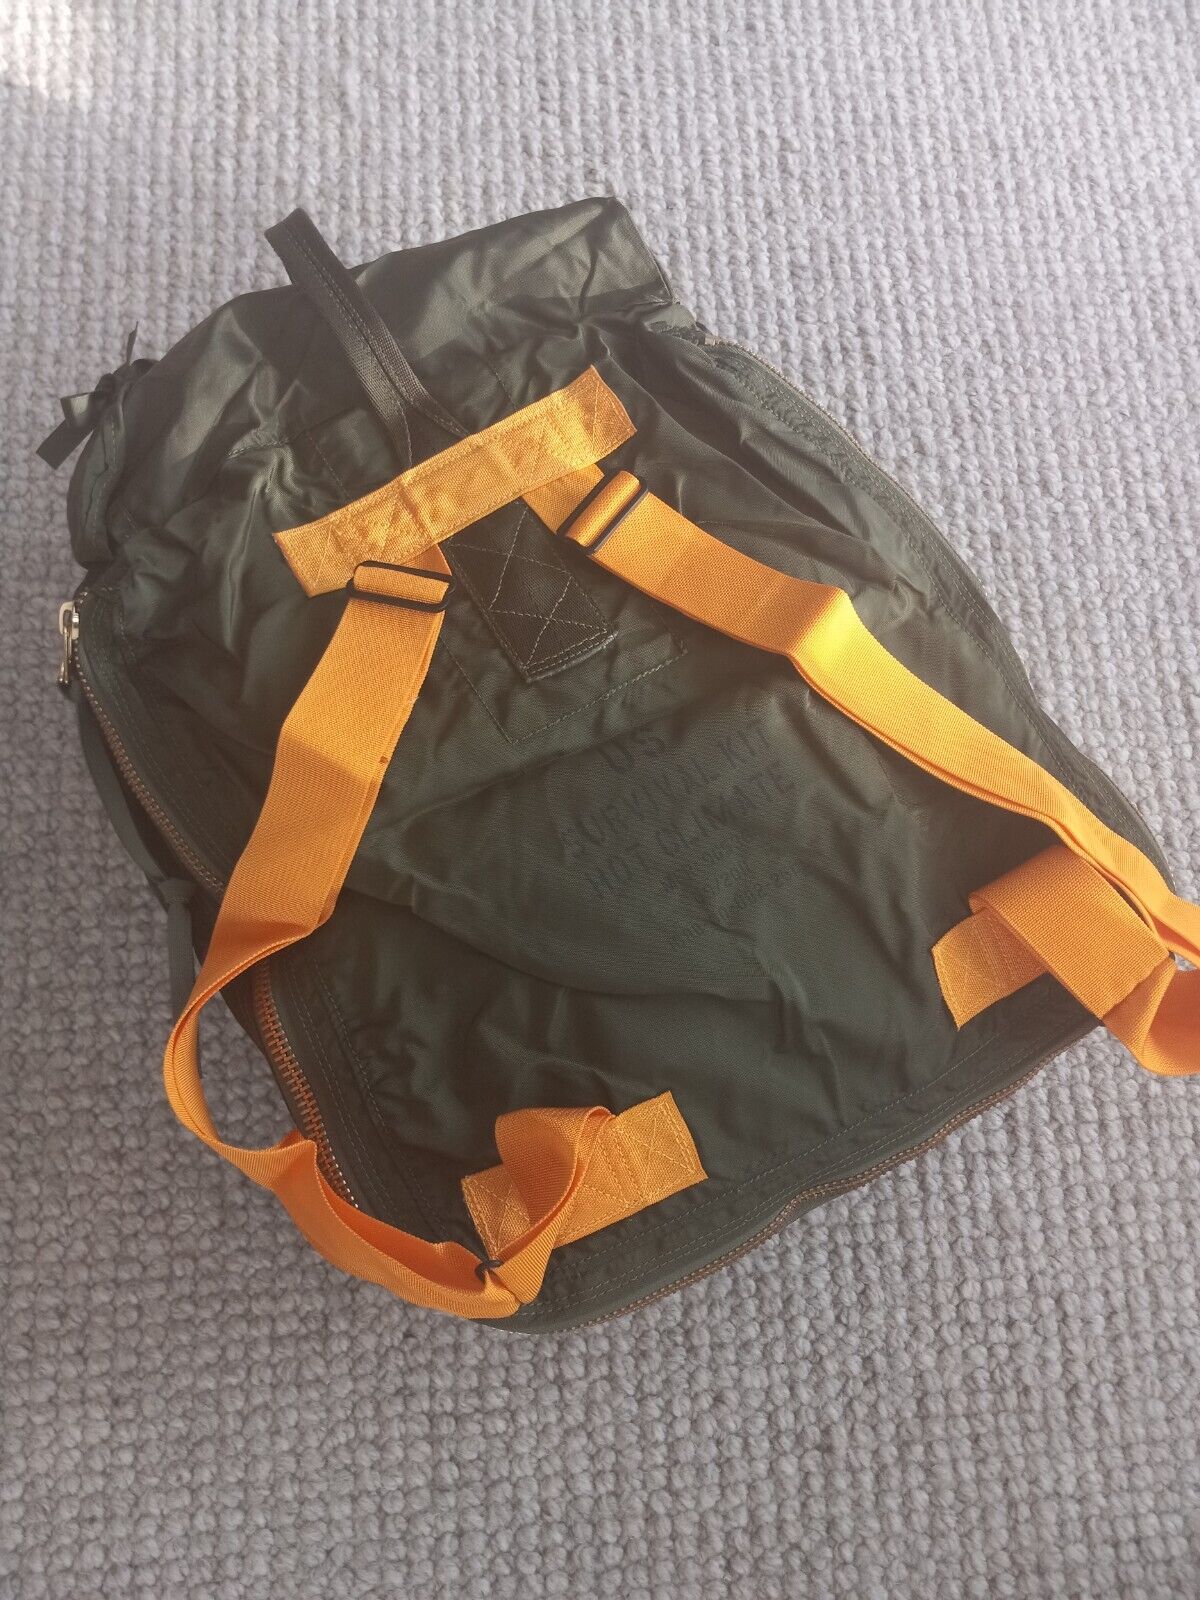 US GI Aviation Survival Kit bag/backpack. Hot Weather.  Empty, NIB.